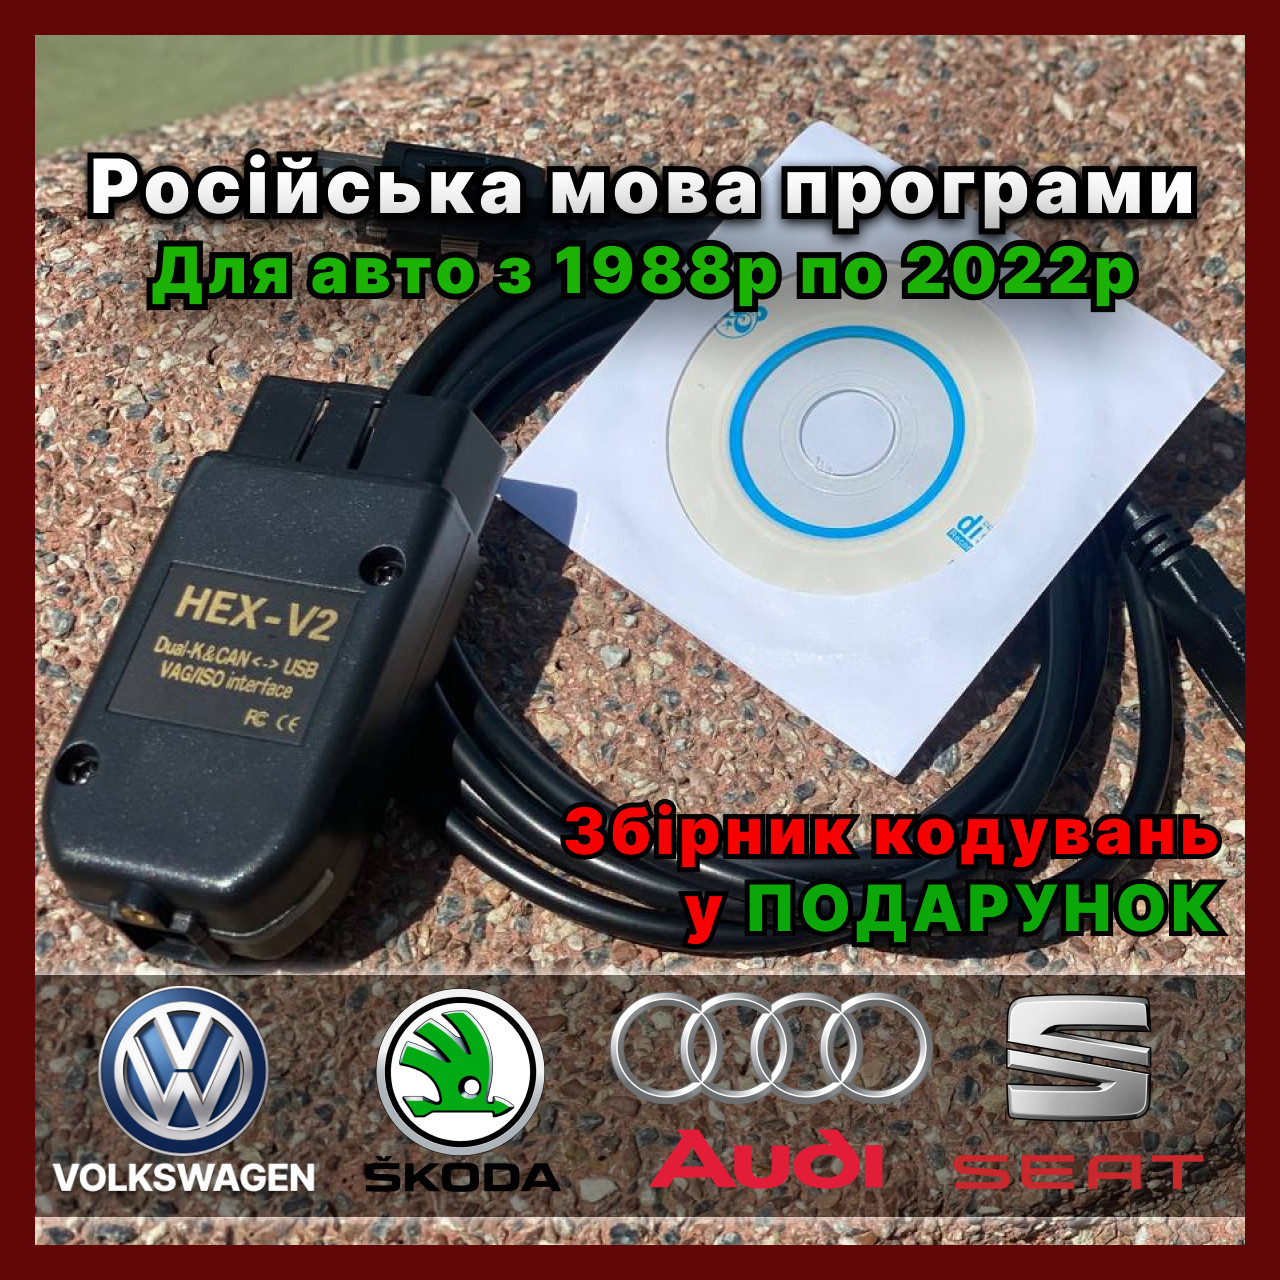 VCDS сканер Vag com HEX V2 версія на російській мові сканер Вася Діагност 18.9 + збірник кодувань